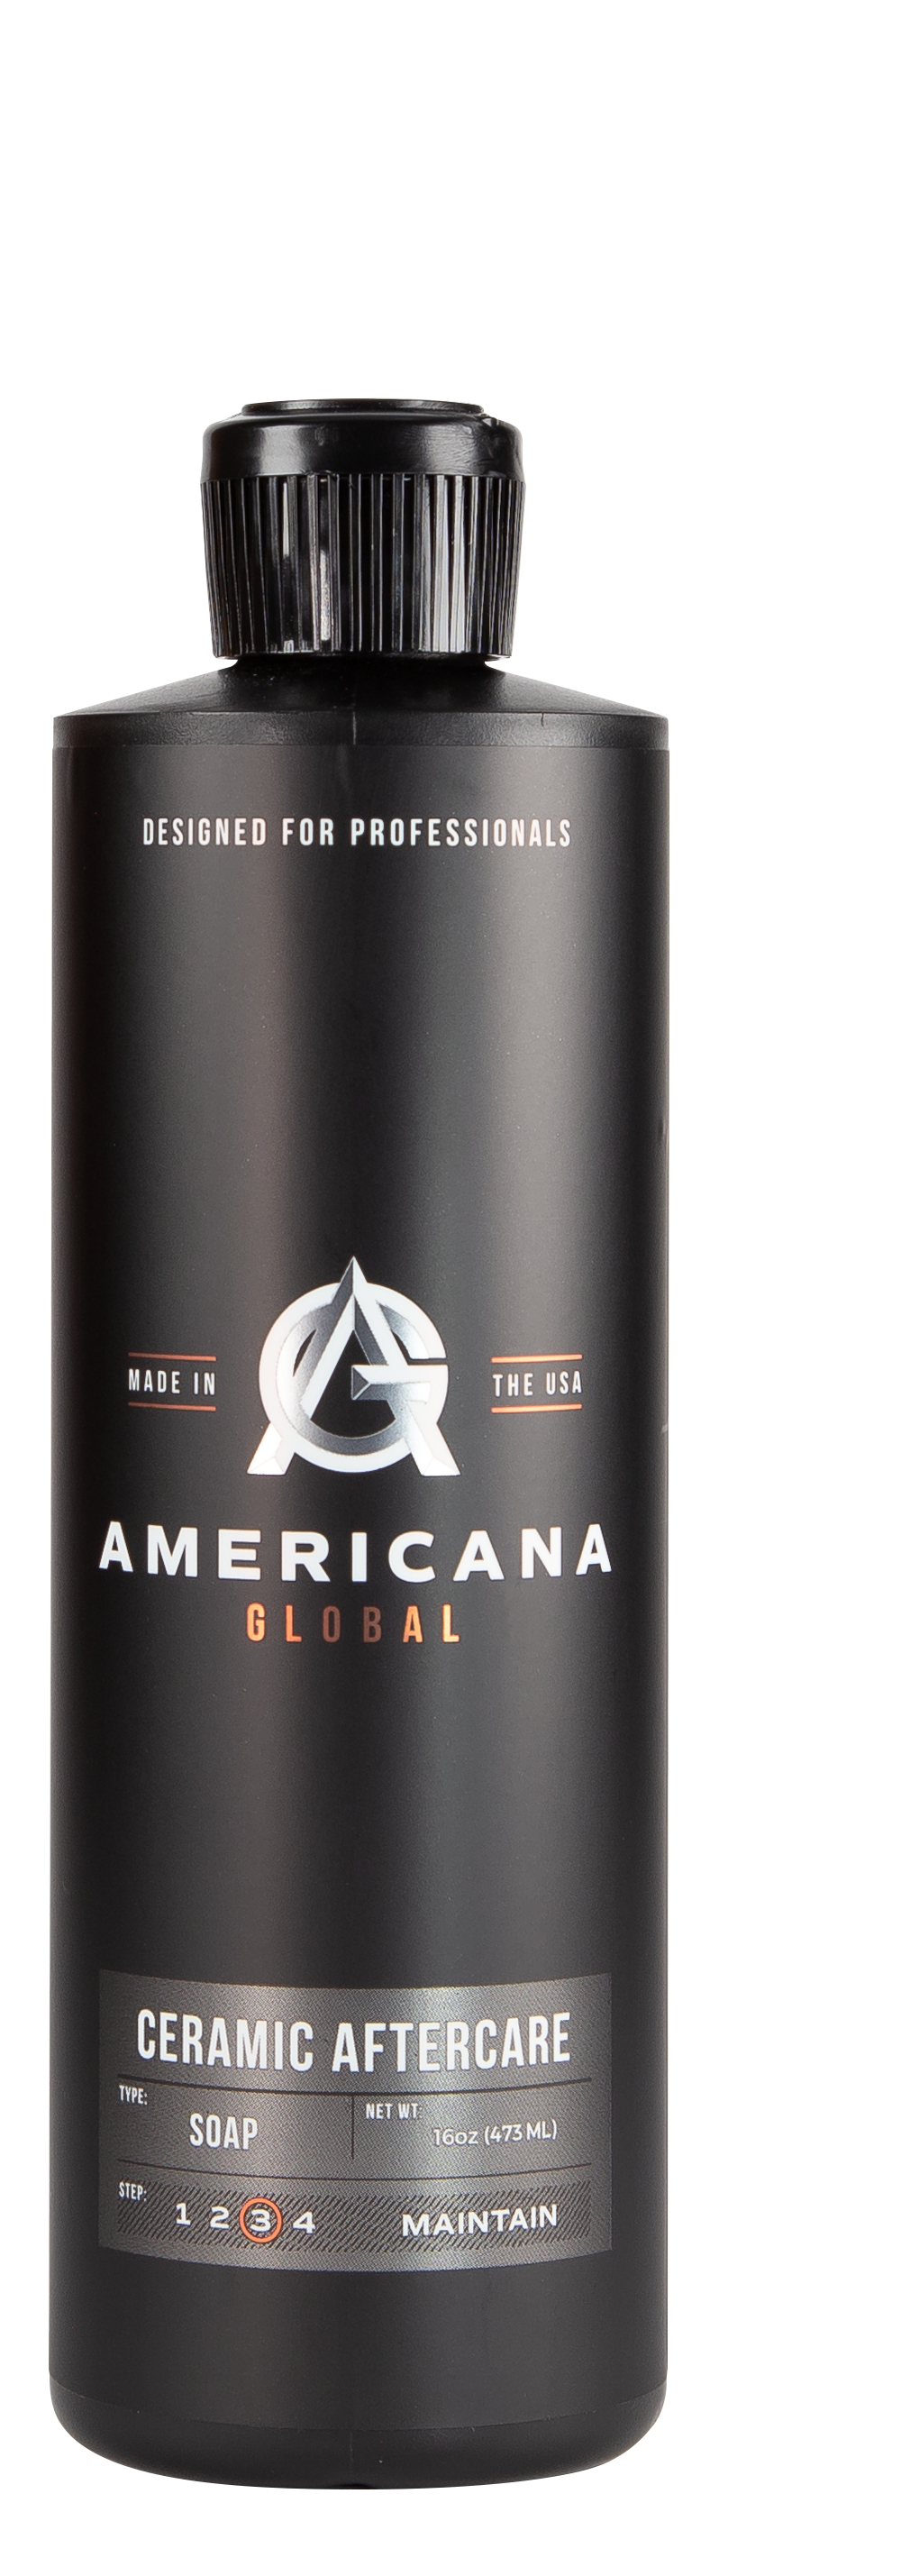 Americana Global - Ceramic After Care Soap